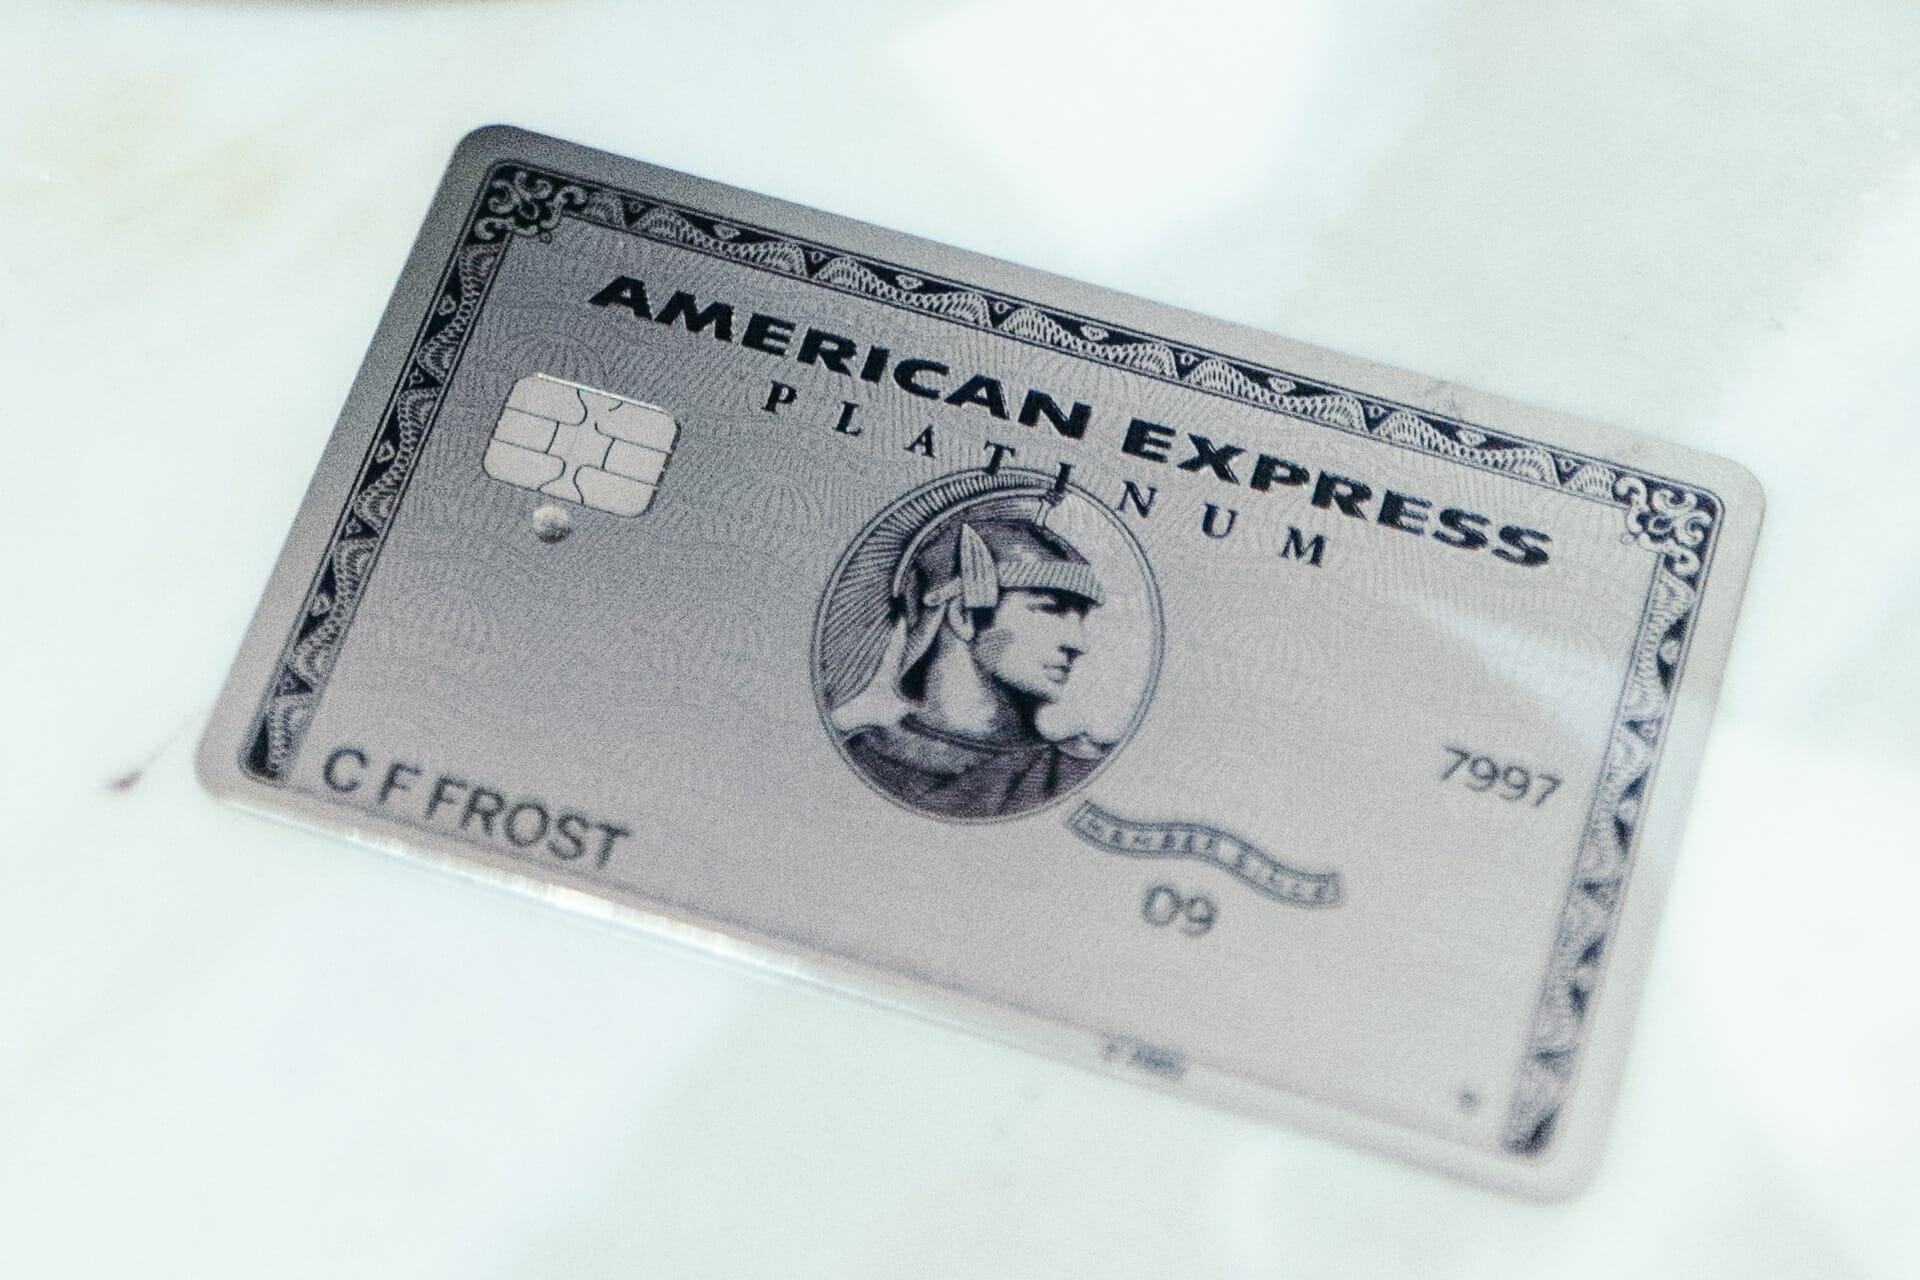 American Express Extends Credit Cards' Bonus